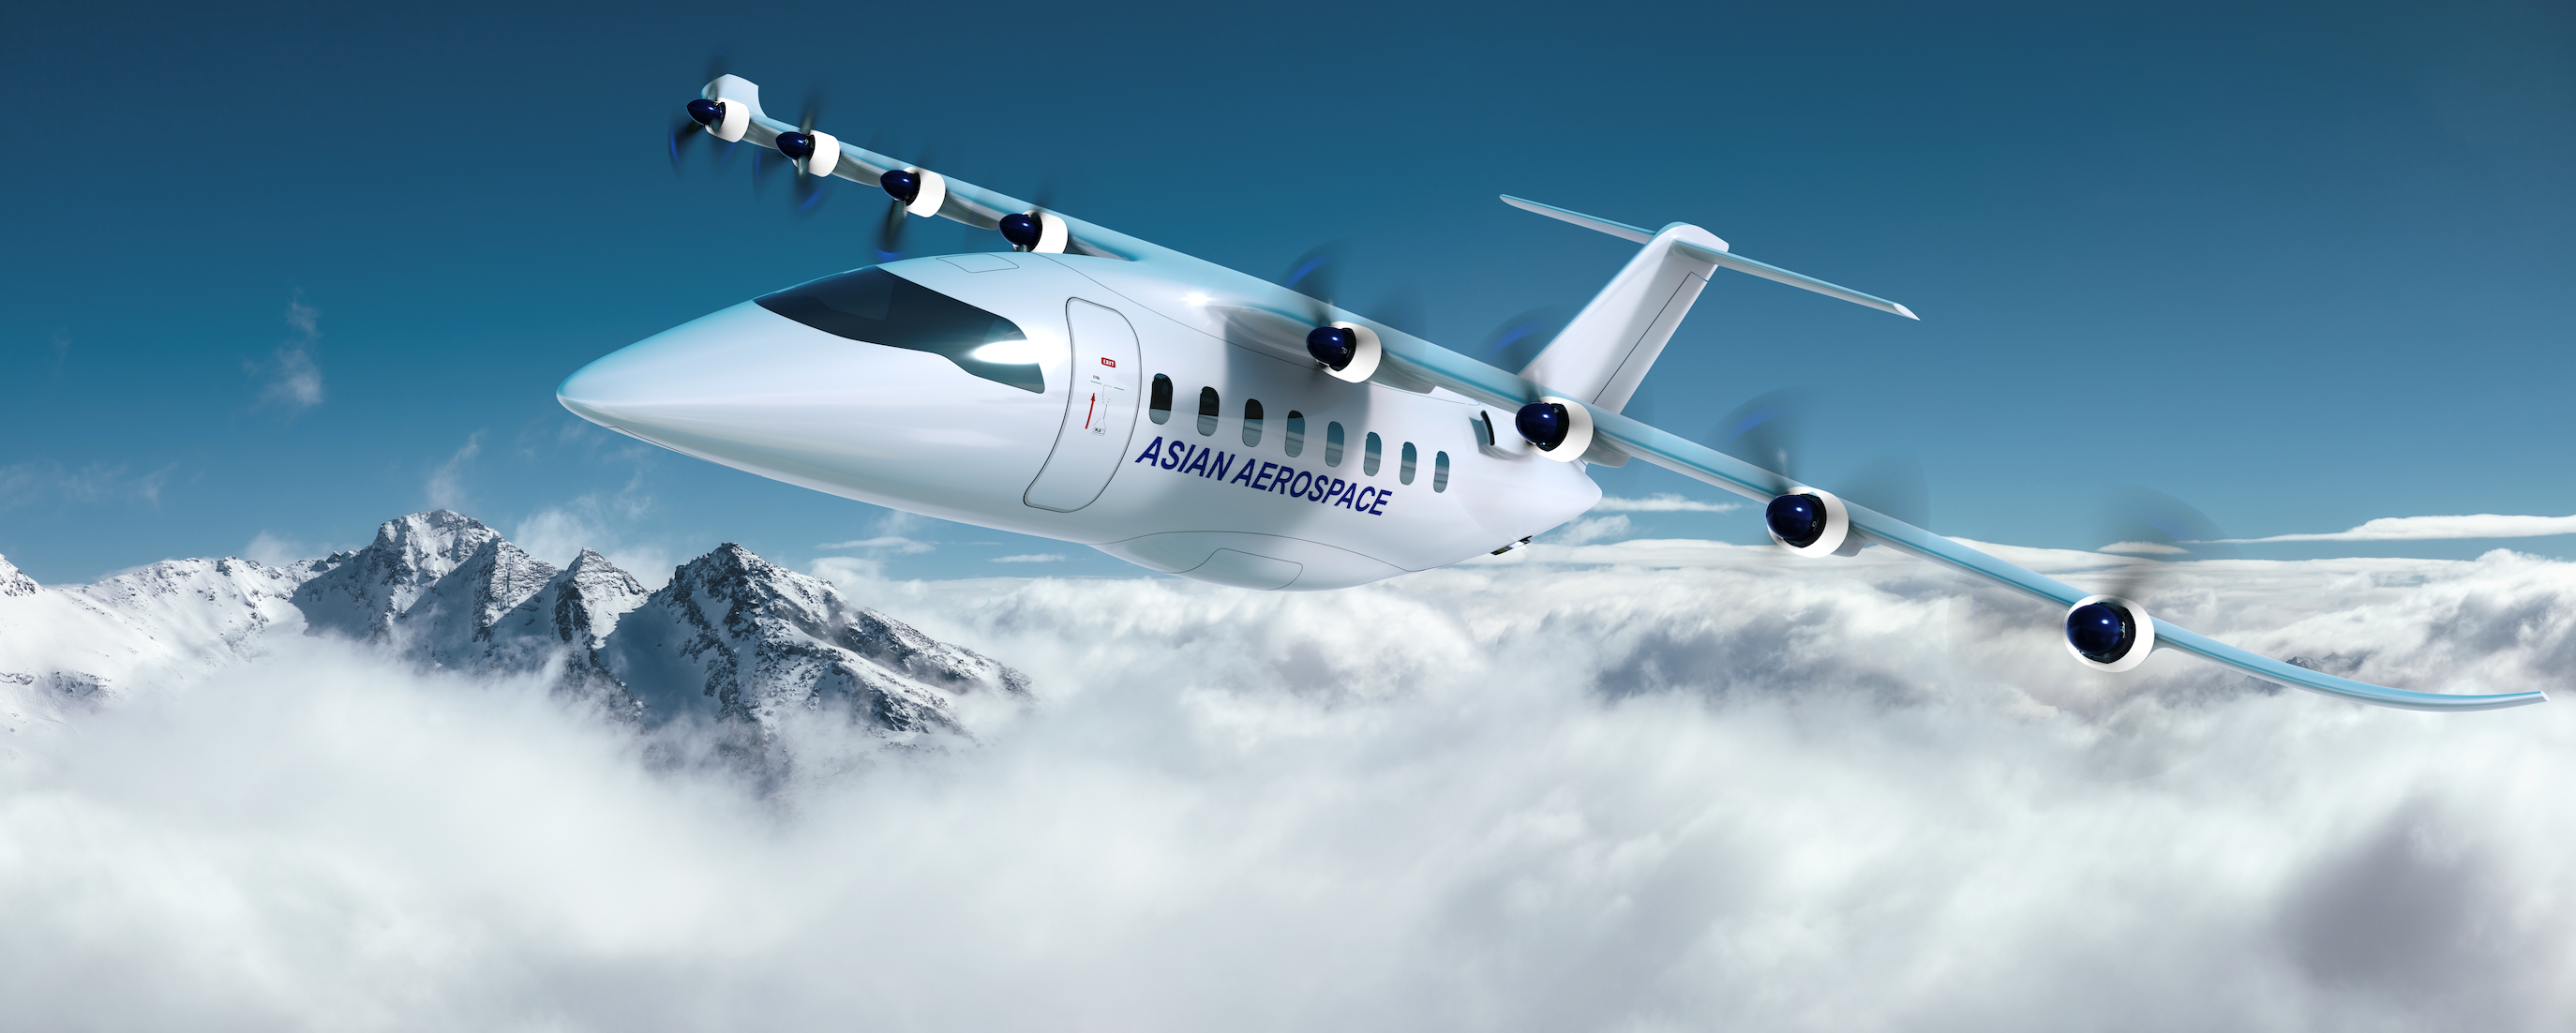 Aura Aero a signé un accord avec Asian Aerospace pour la ventre de trois modèles ERA. (Photo : Aura Aero)